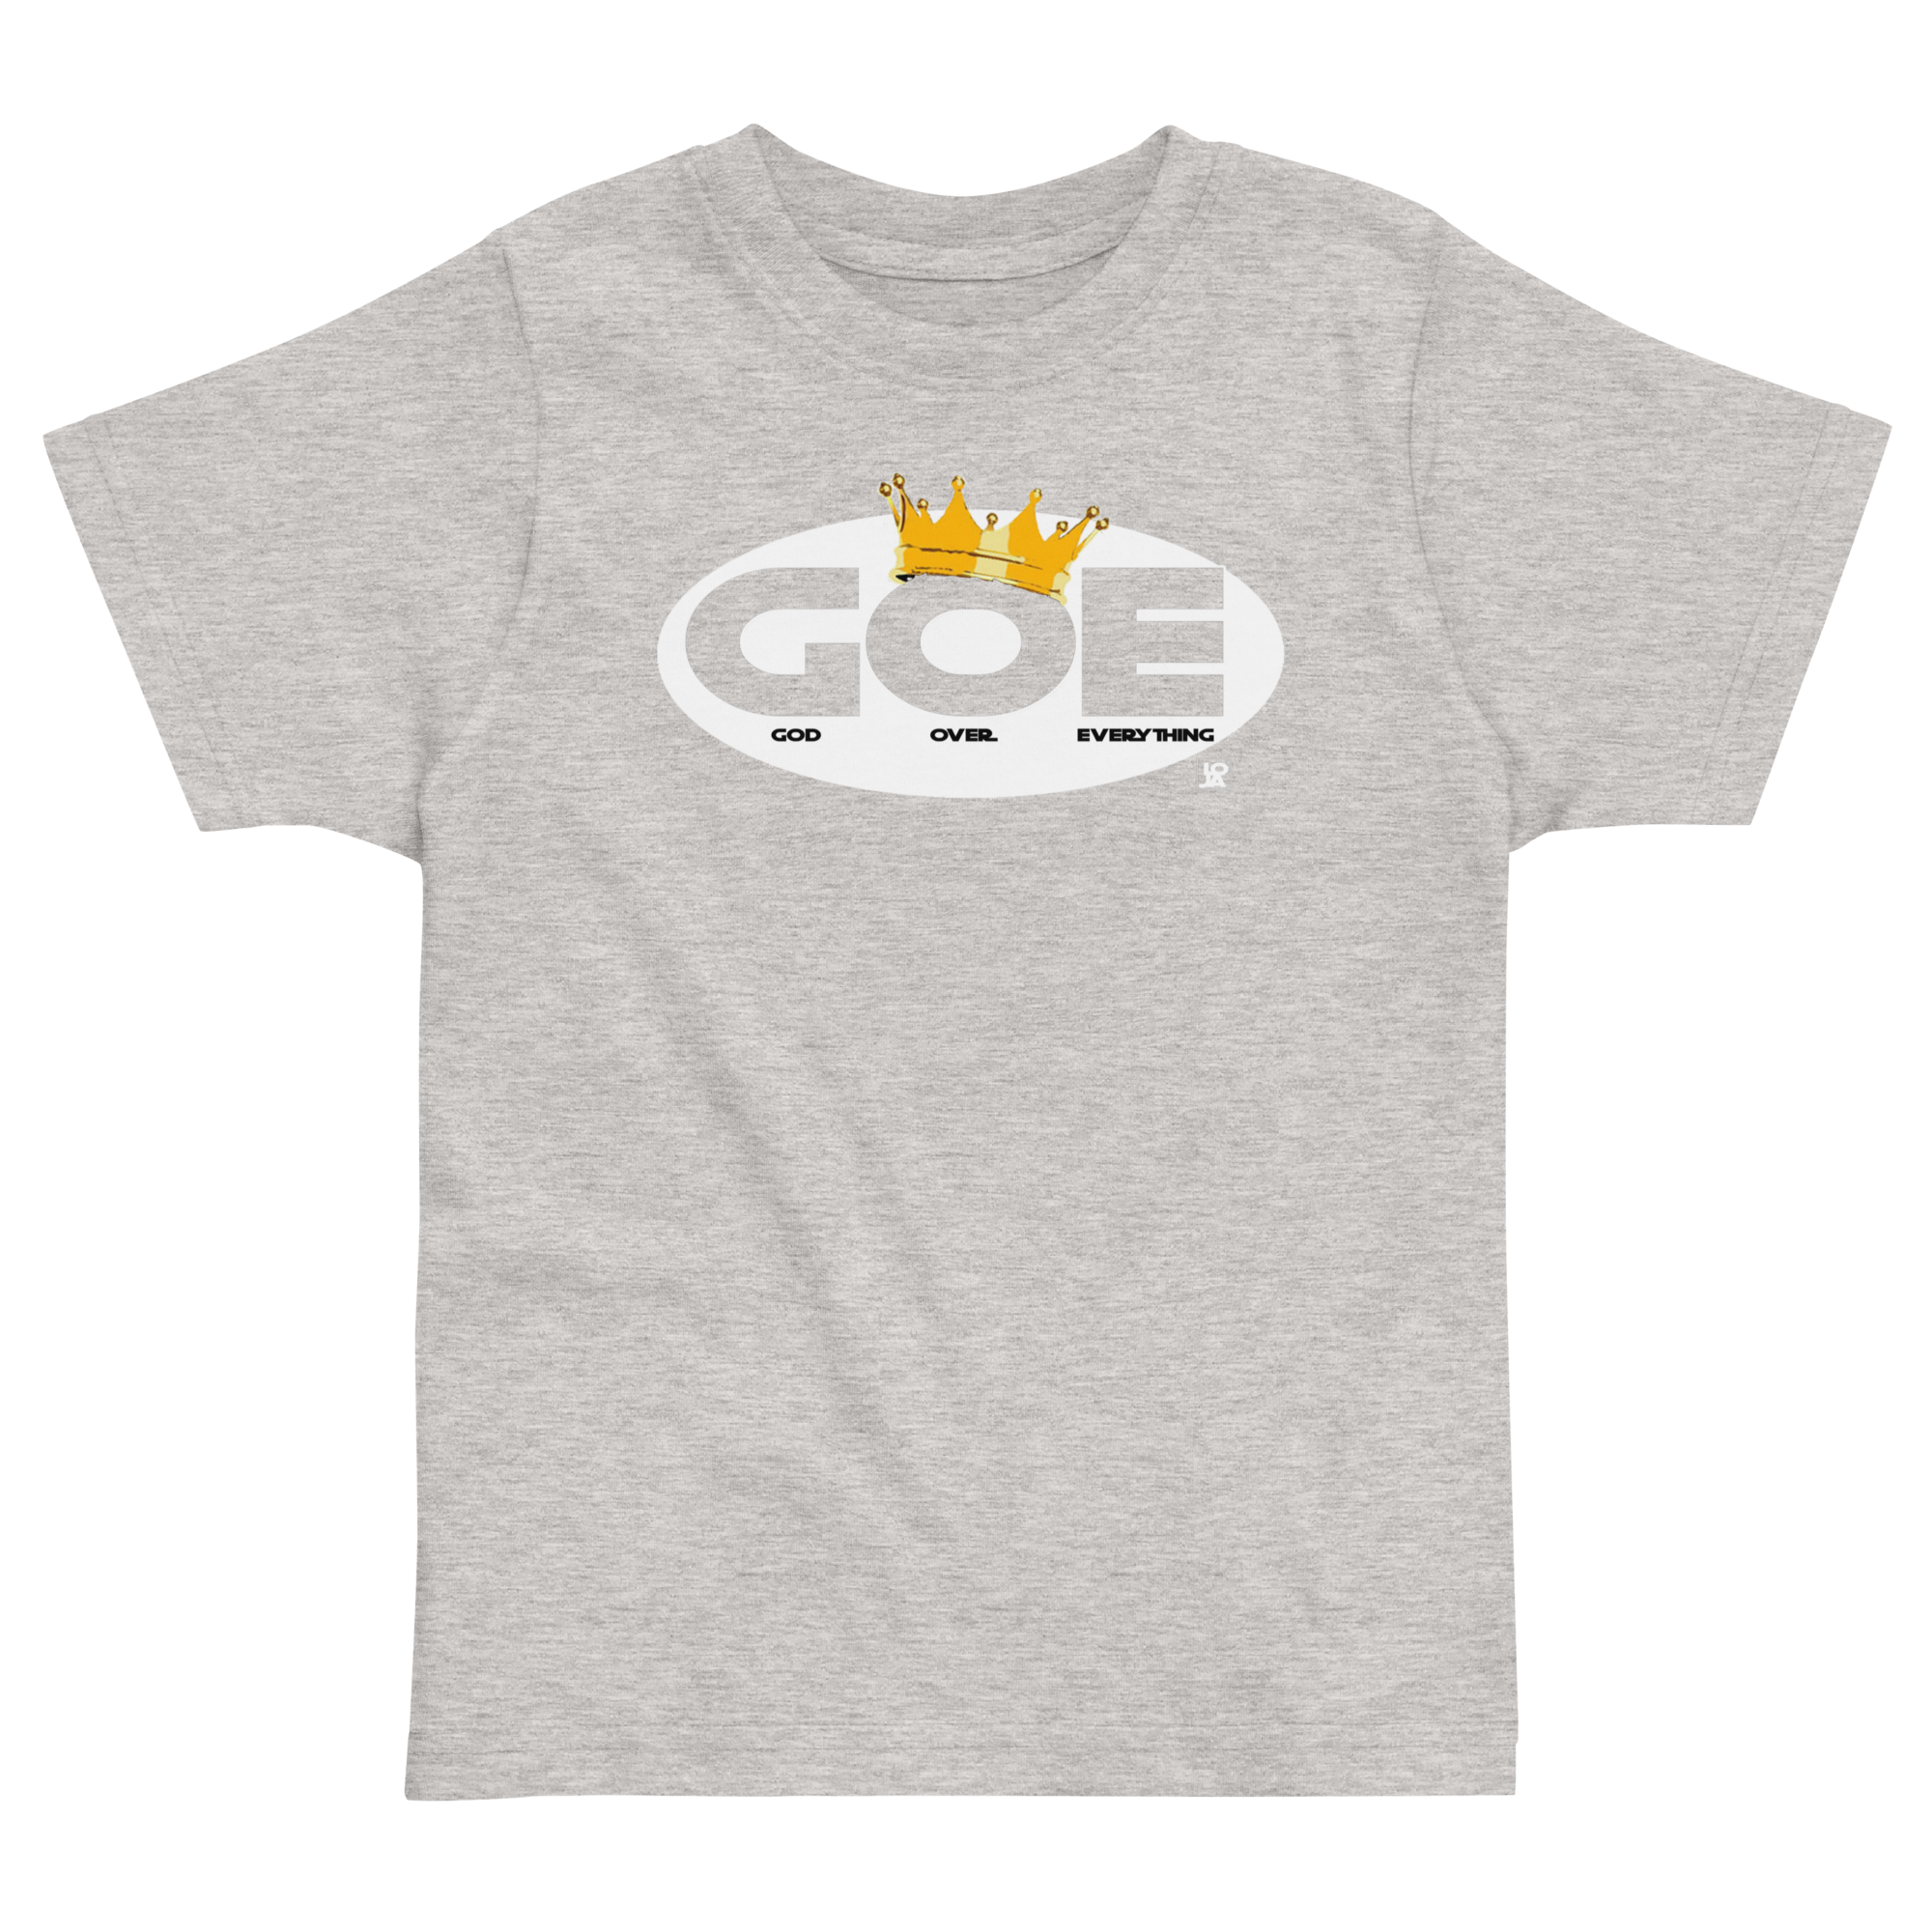 GOE God Over Everything V.1 Toddler jersey t-shirt